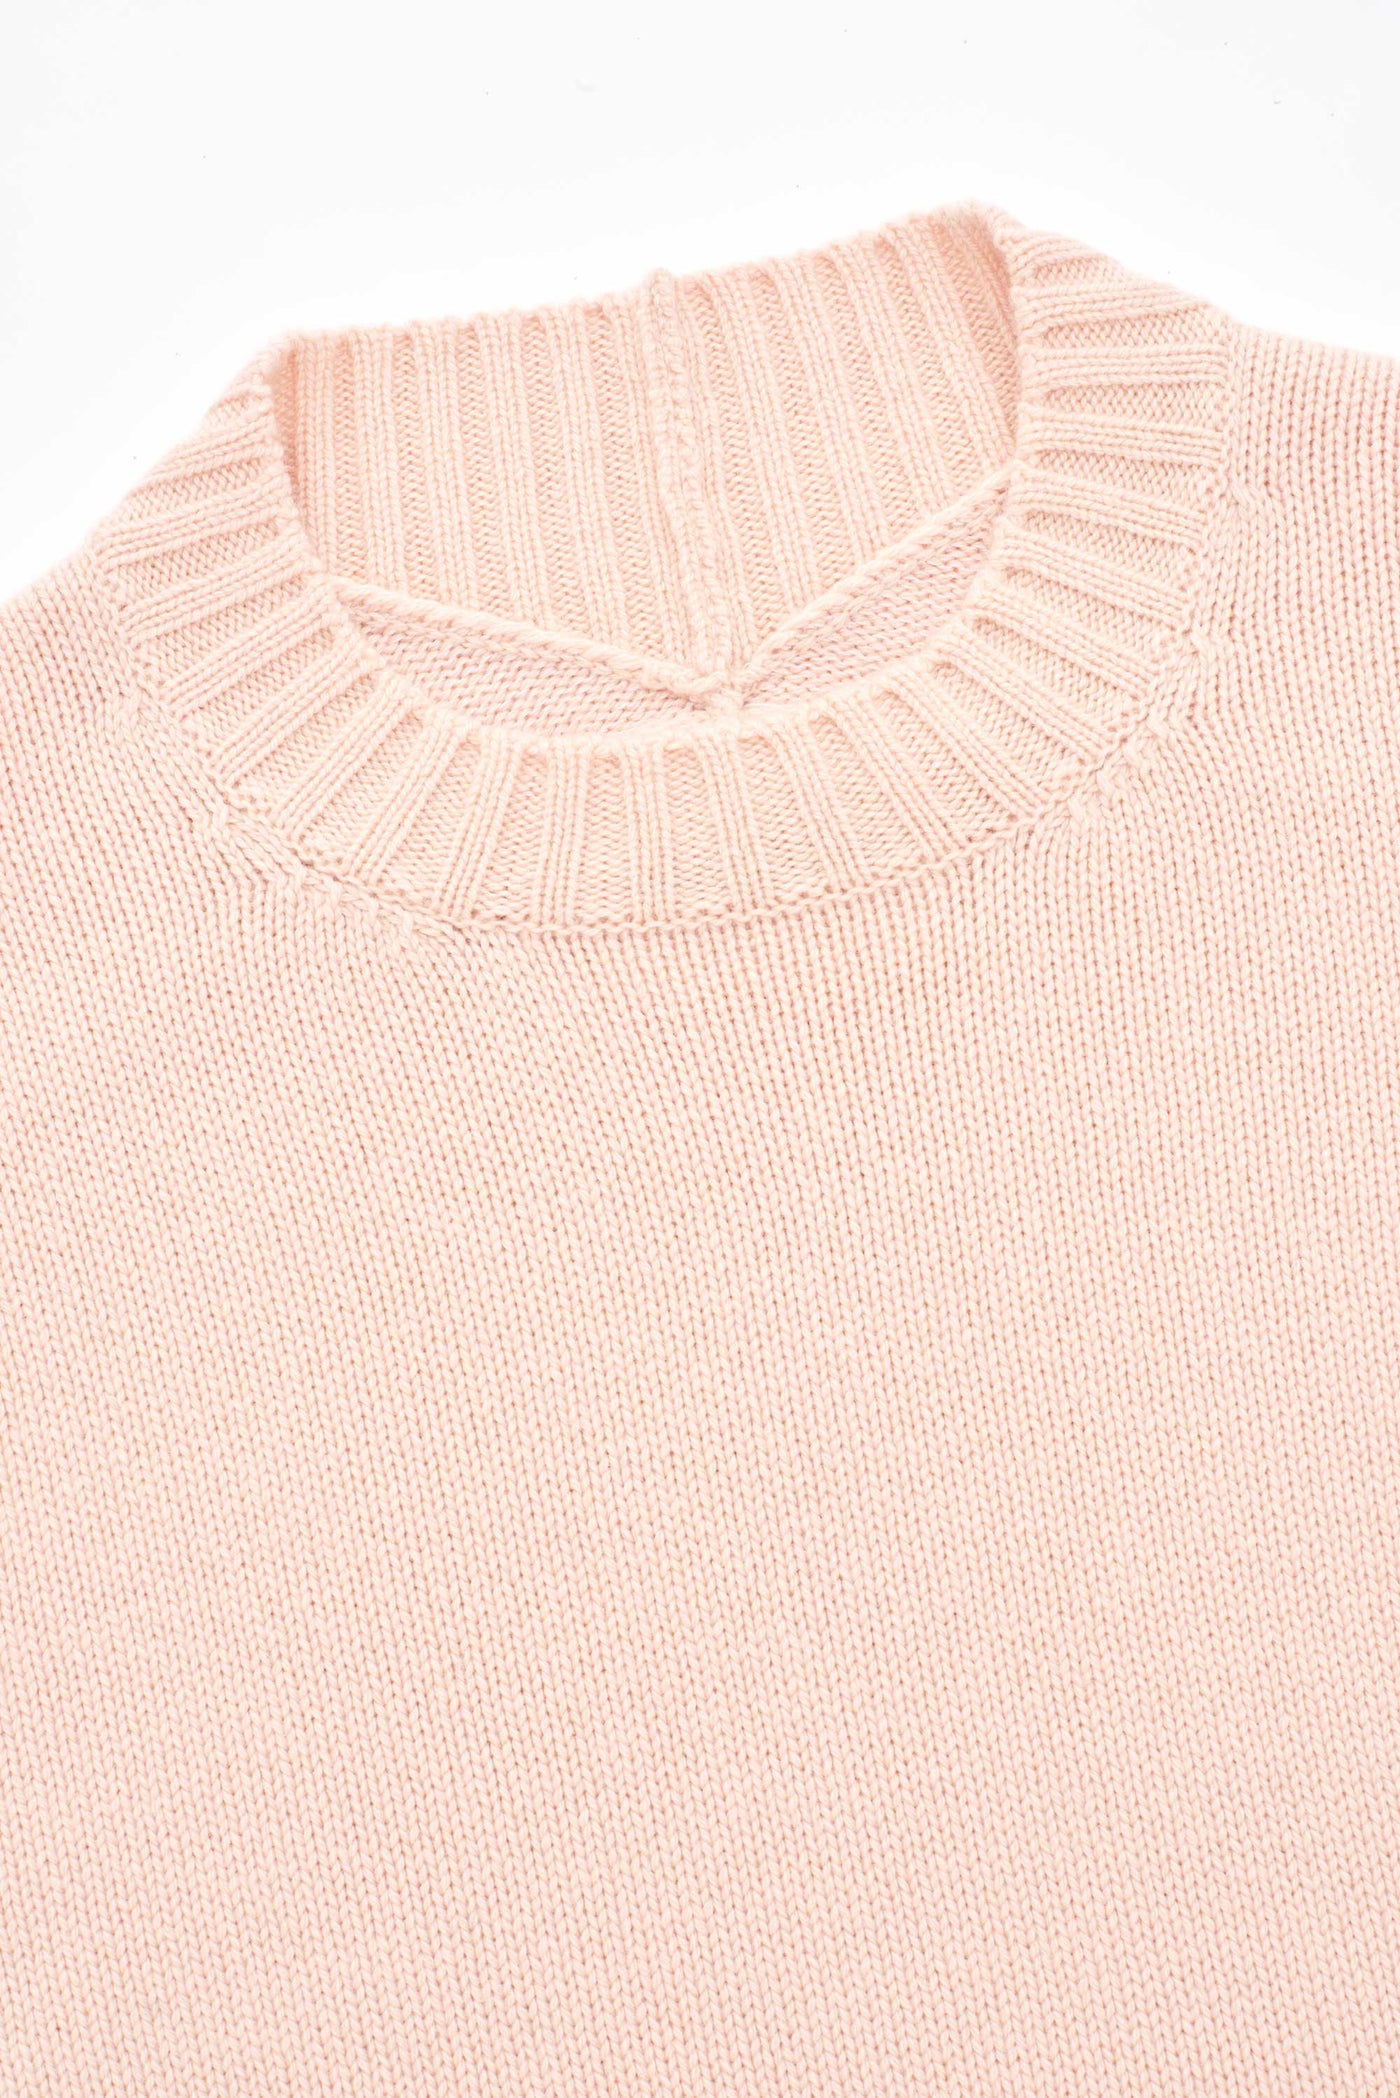 Long Sleeve Round Neck Sweater